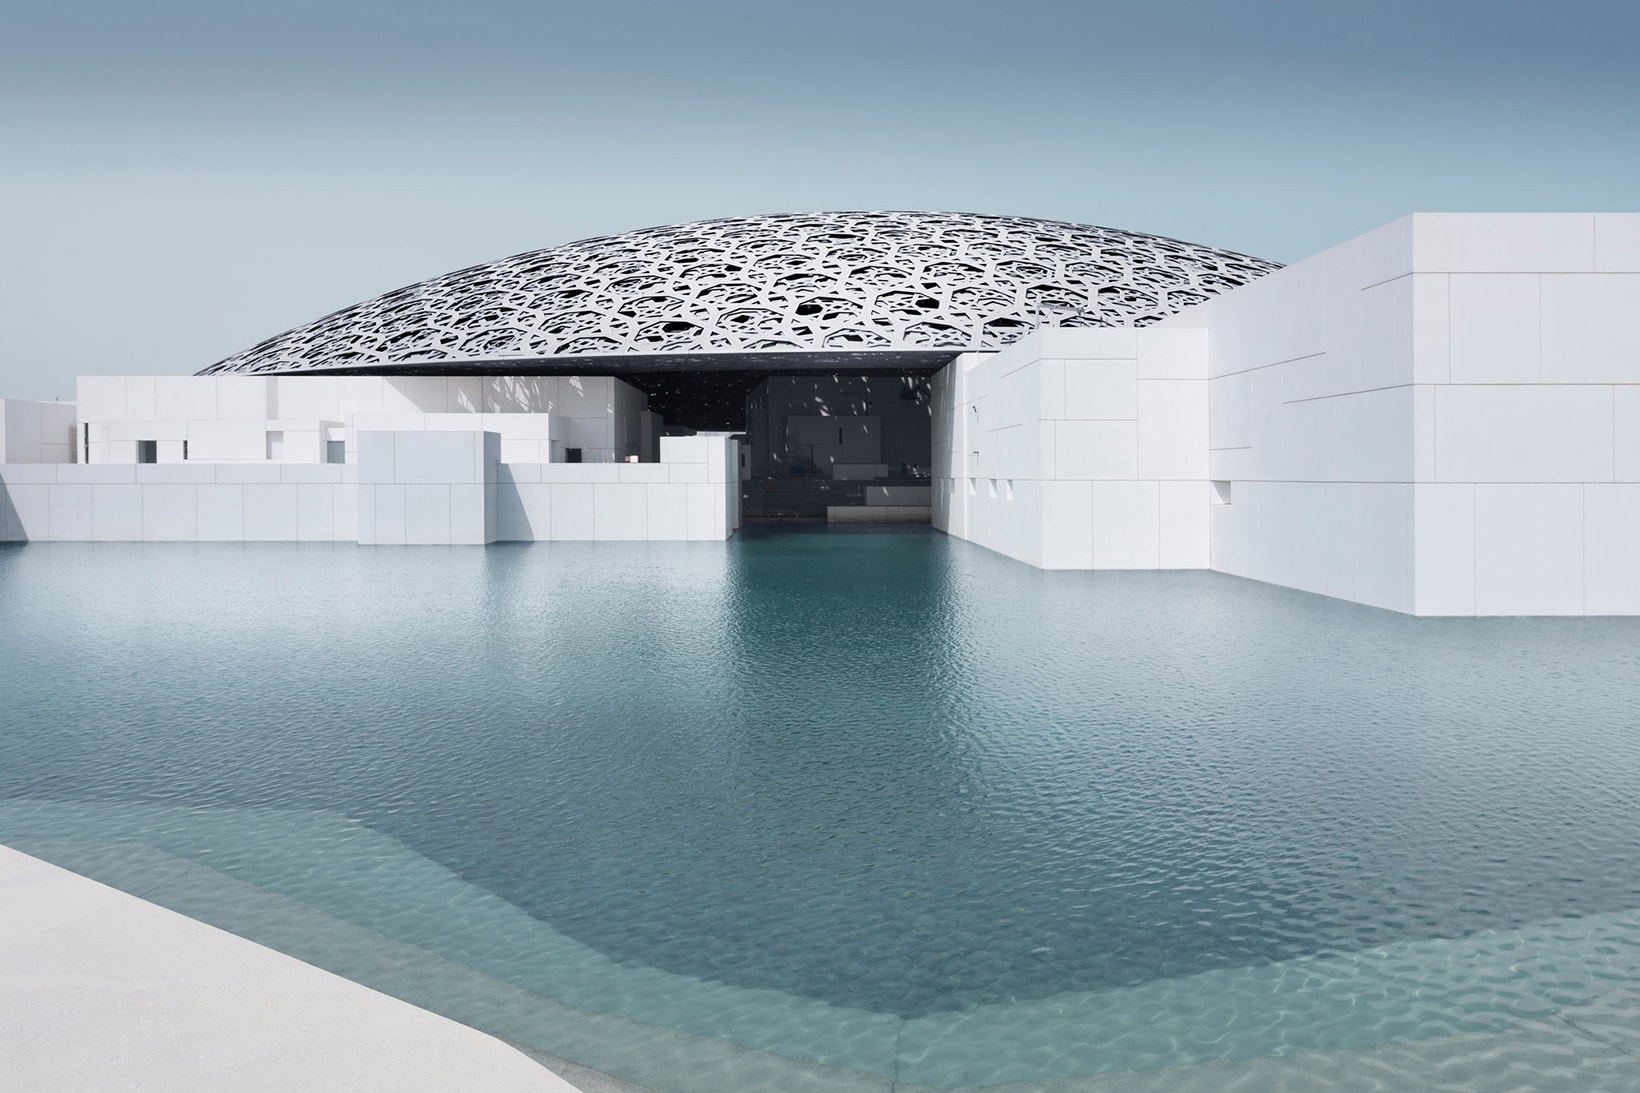 Louvre Abu Dhabi 1 4 Billion USD Museum Preview Video Inside Look UAE Art Design